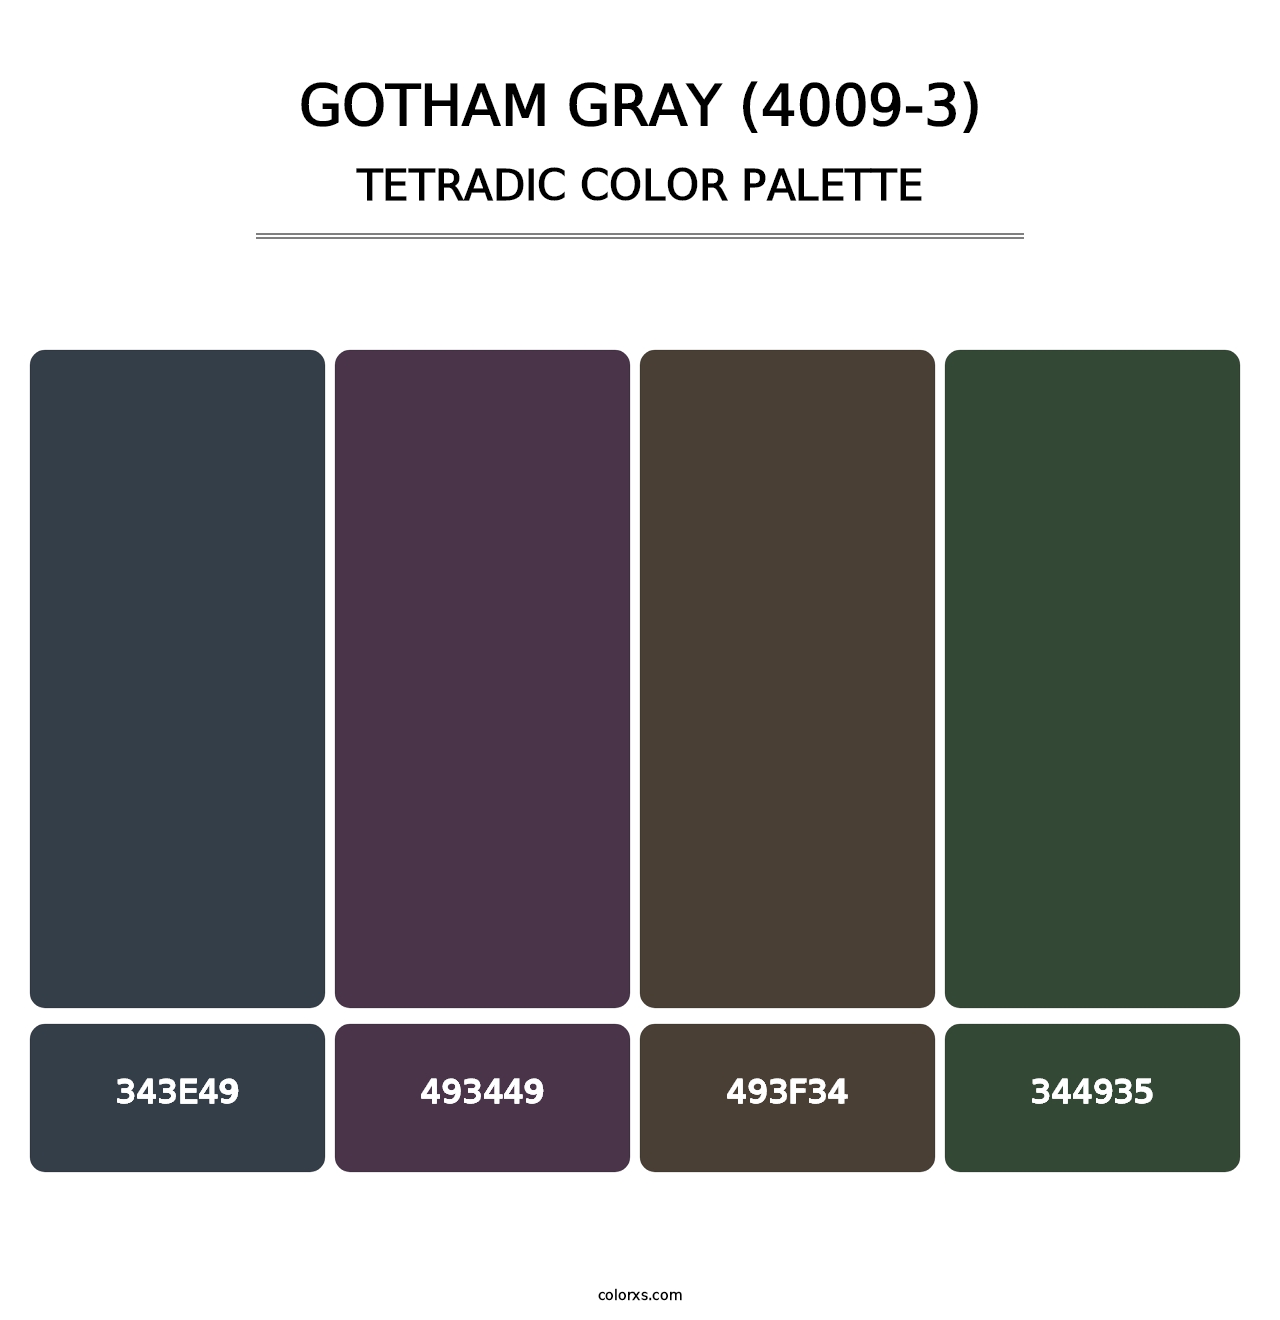 Gotham Gray (4009-3) - Tetradic Color Palette